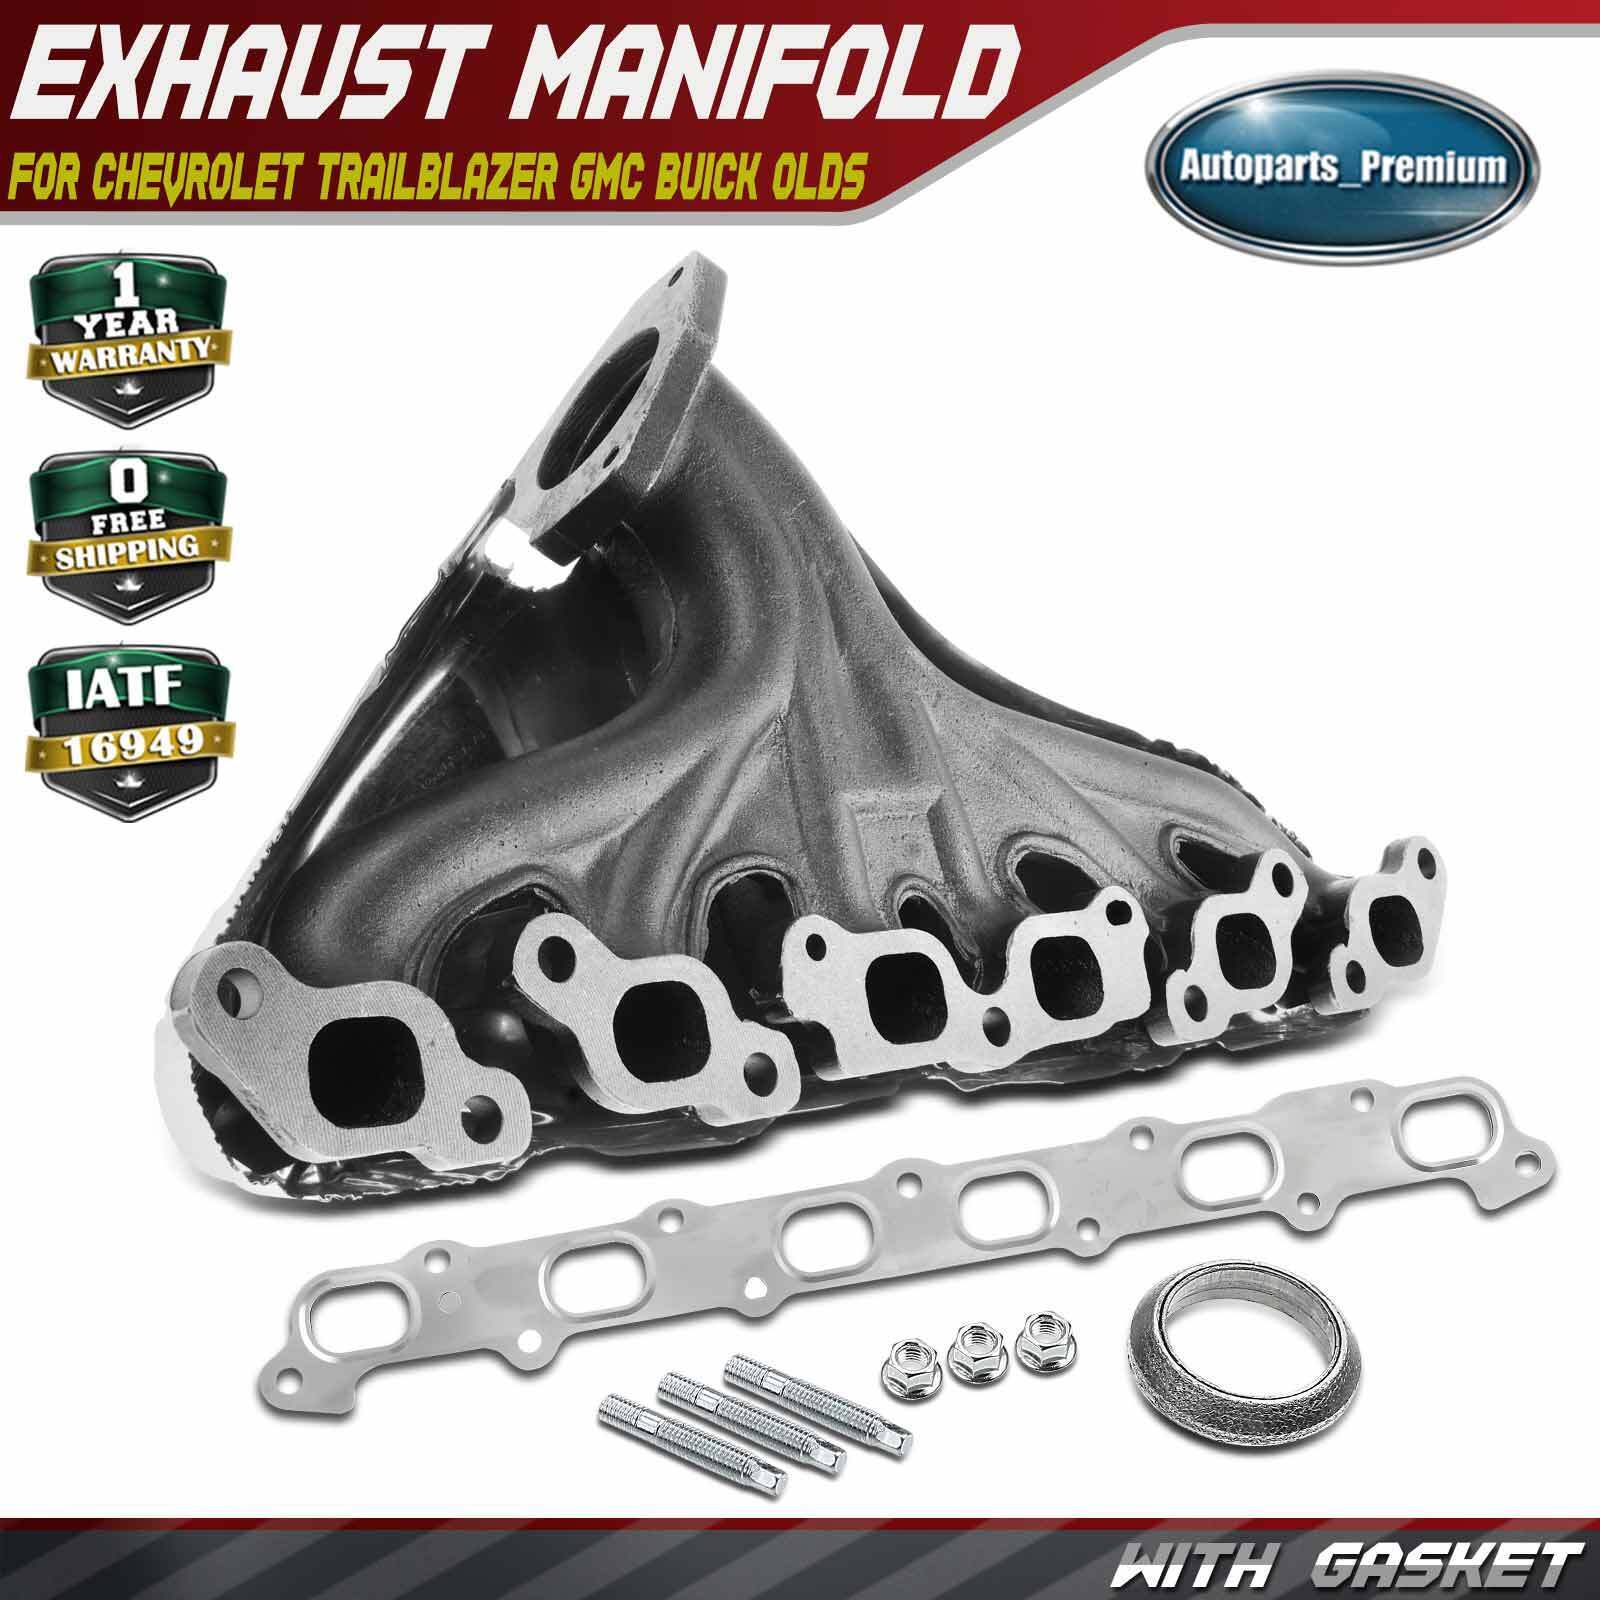 Exhaust Manifold w/ Gasket Kit for Chevrolet Trailblazer GMC Buick Olds L6 4.2L